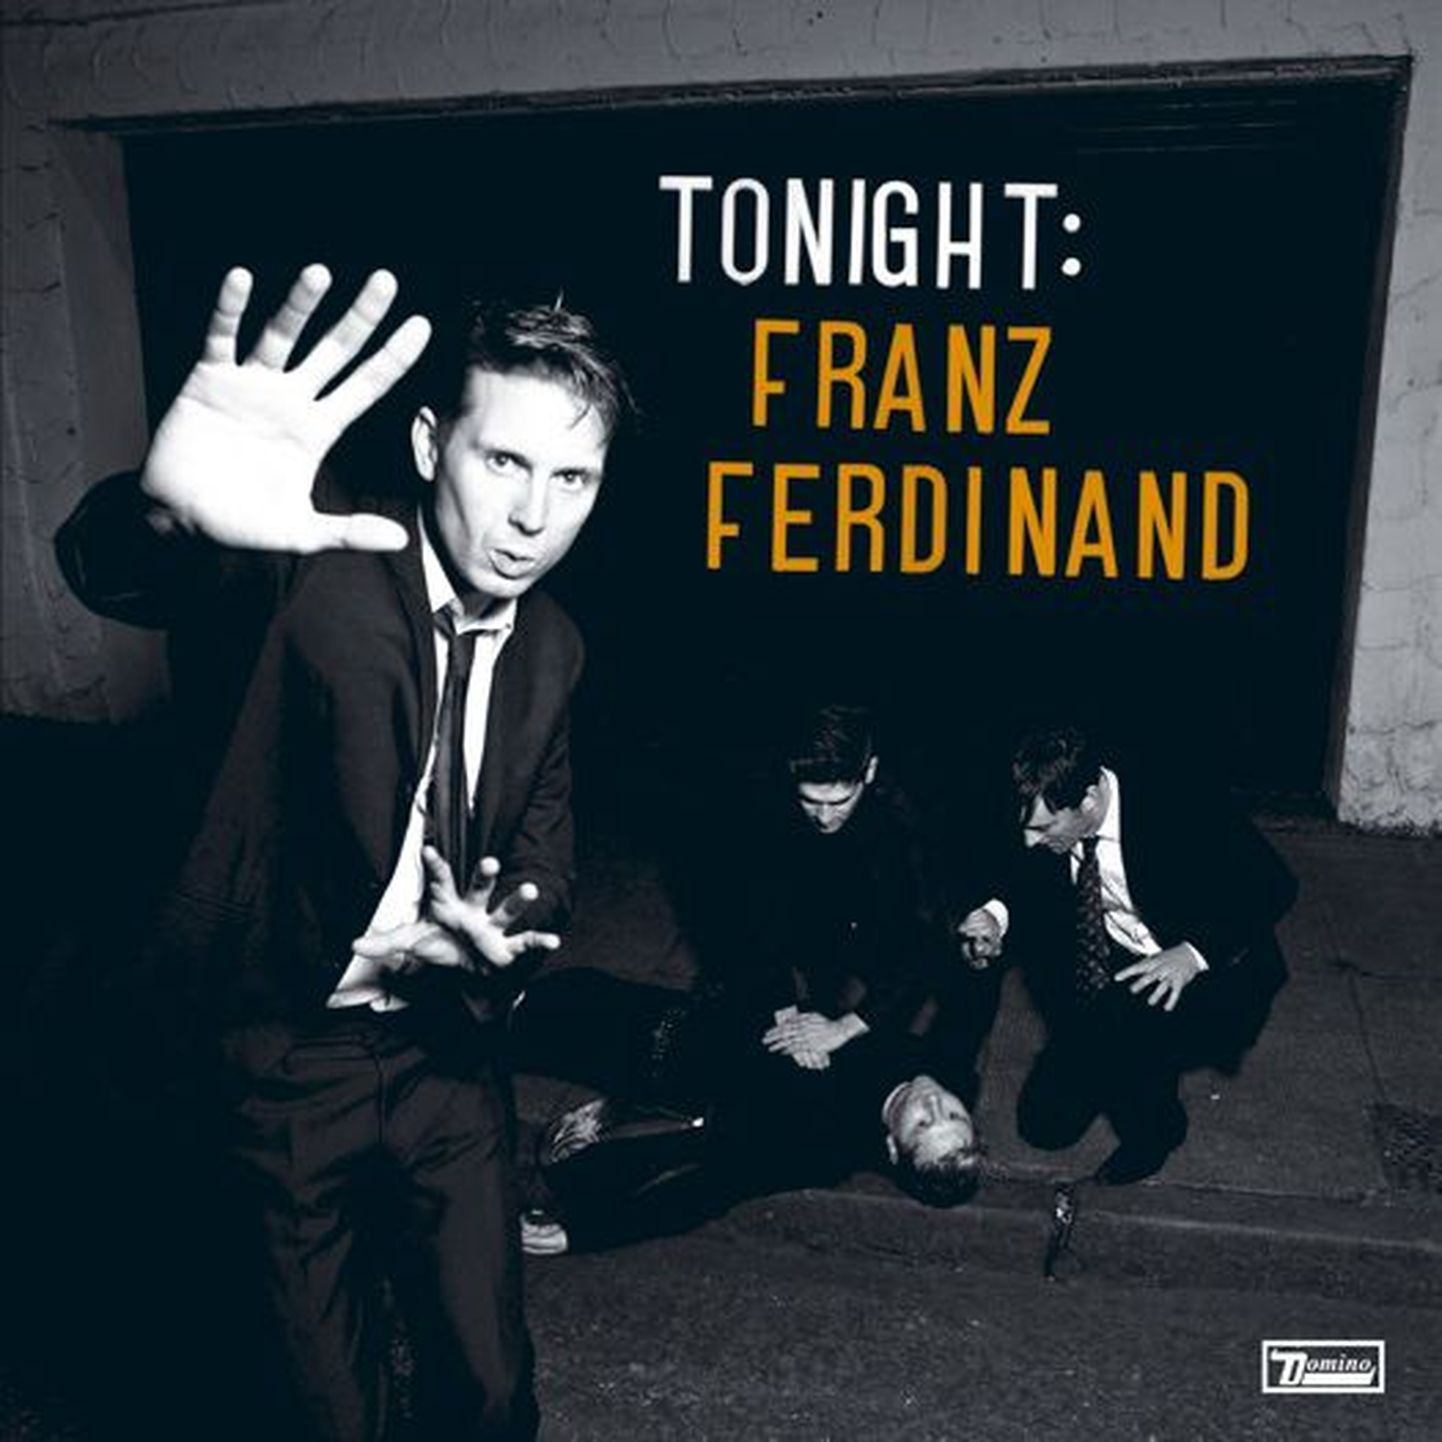 Franz Ferdinand "Tonight: Franz Ferdinand".